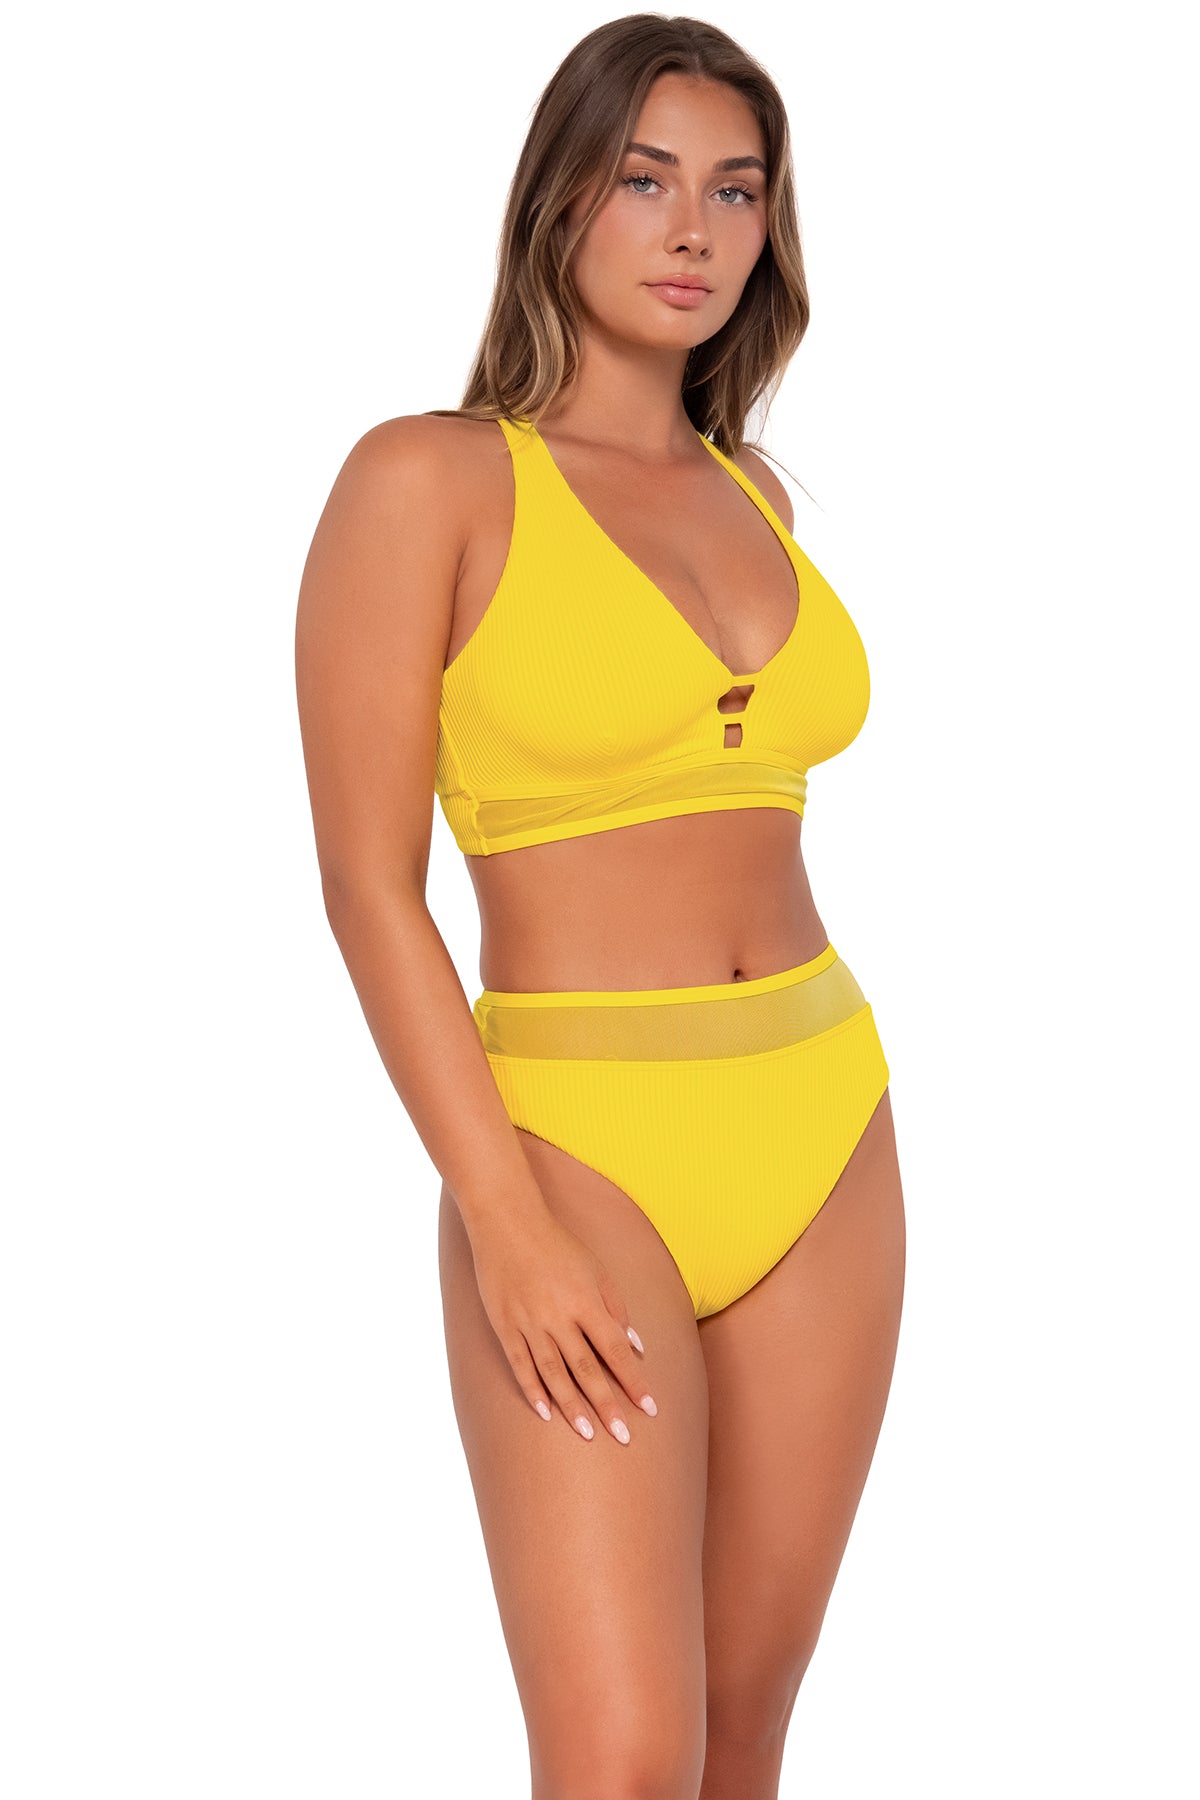 Side pose #1 of Taylor wearing Sunsets Lemon Zest Sandbar Rib Danica Top with matching Annie High Waist bikini